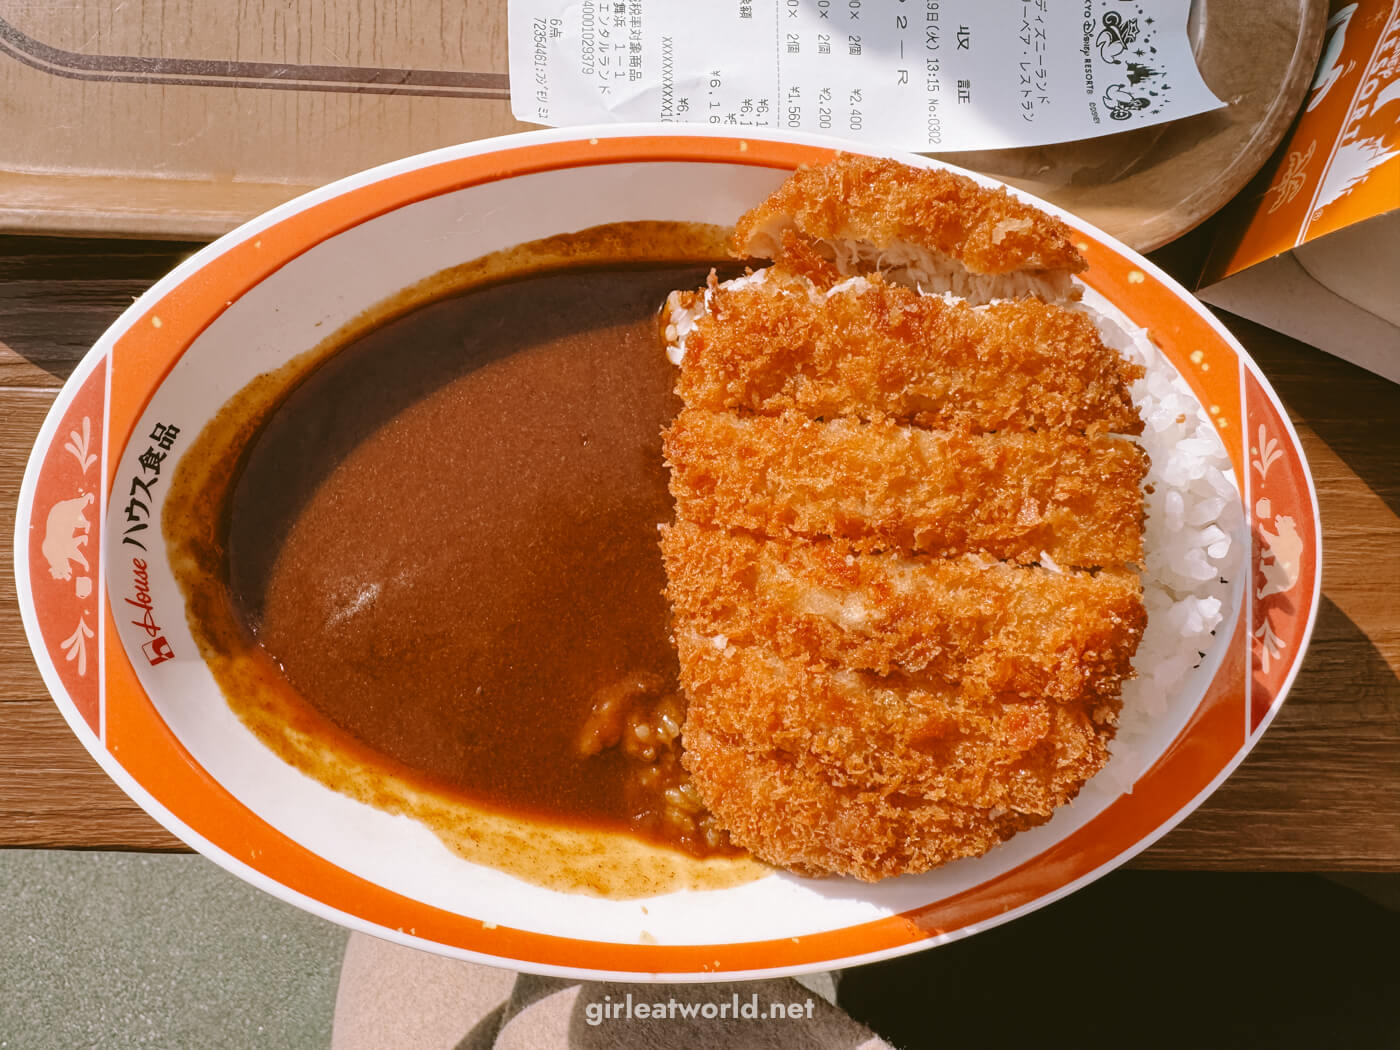 Japanese Curry Rice with Pork Katsu at Tokyo Disneyland